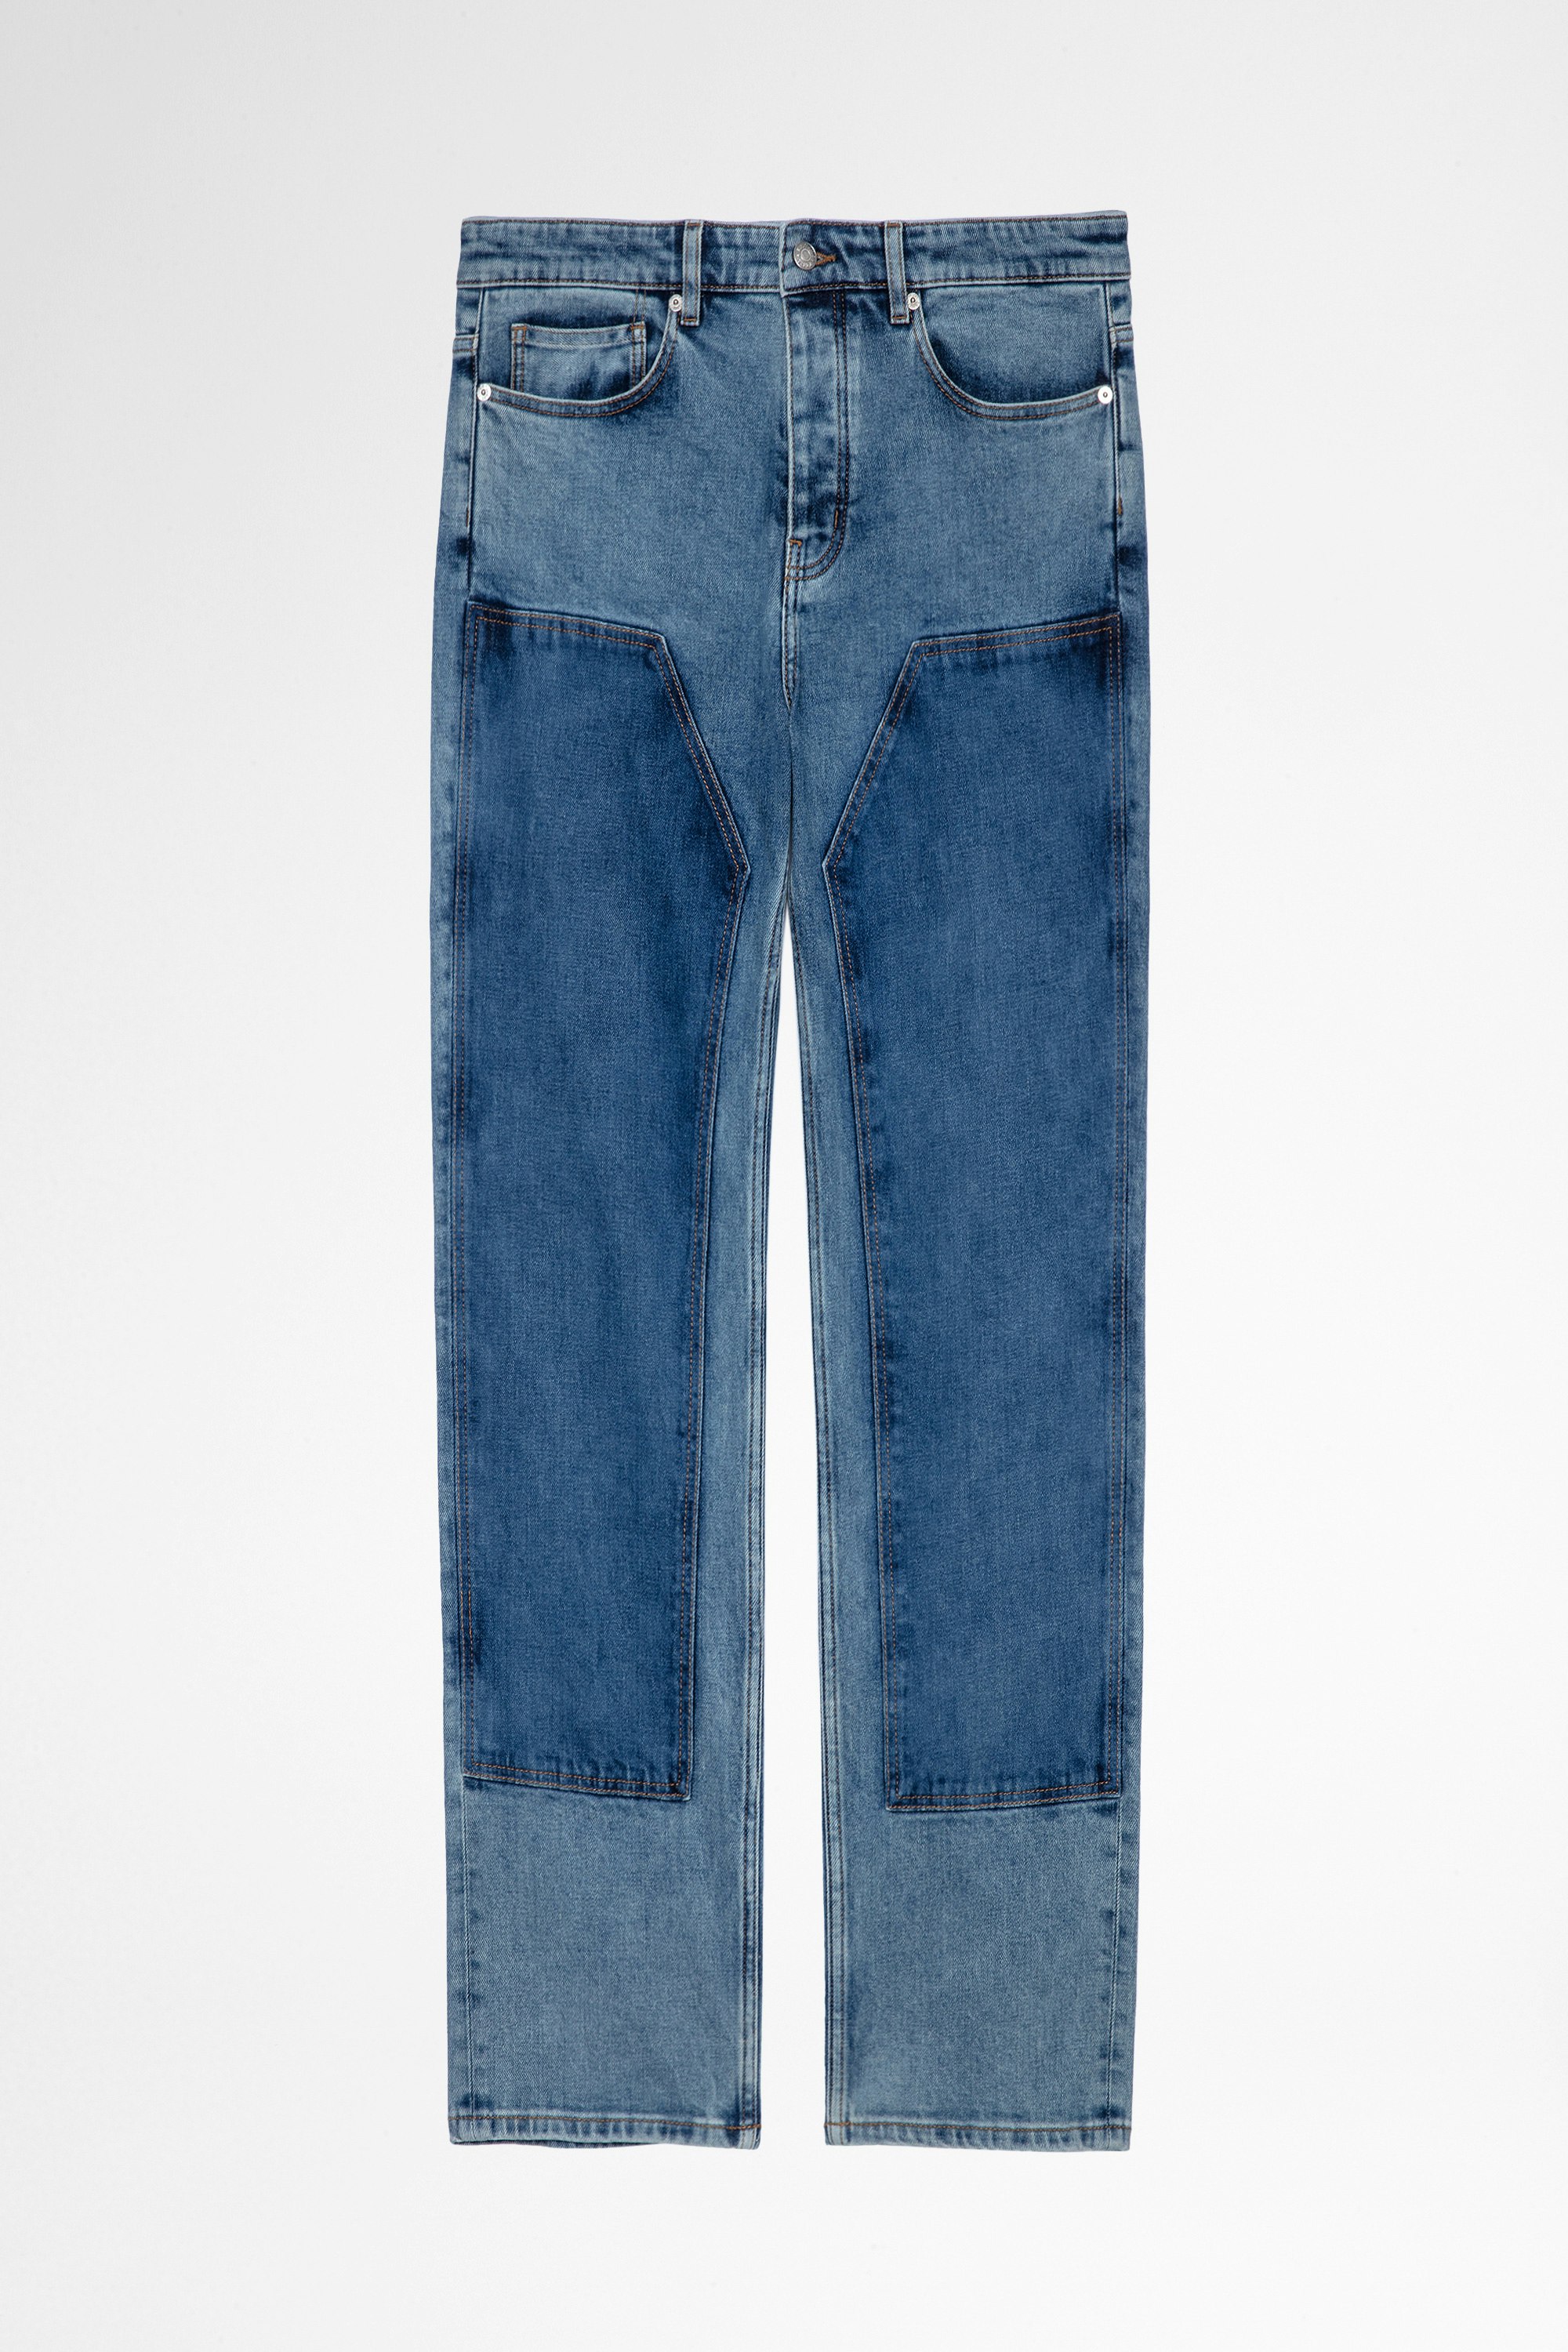 Jeans John Jeans in Kontrastblau für Herren